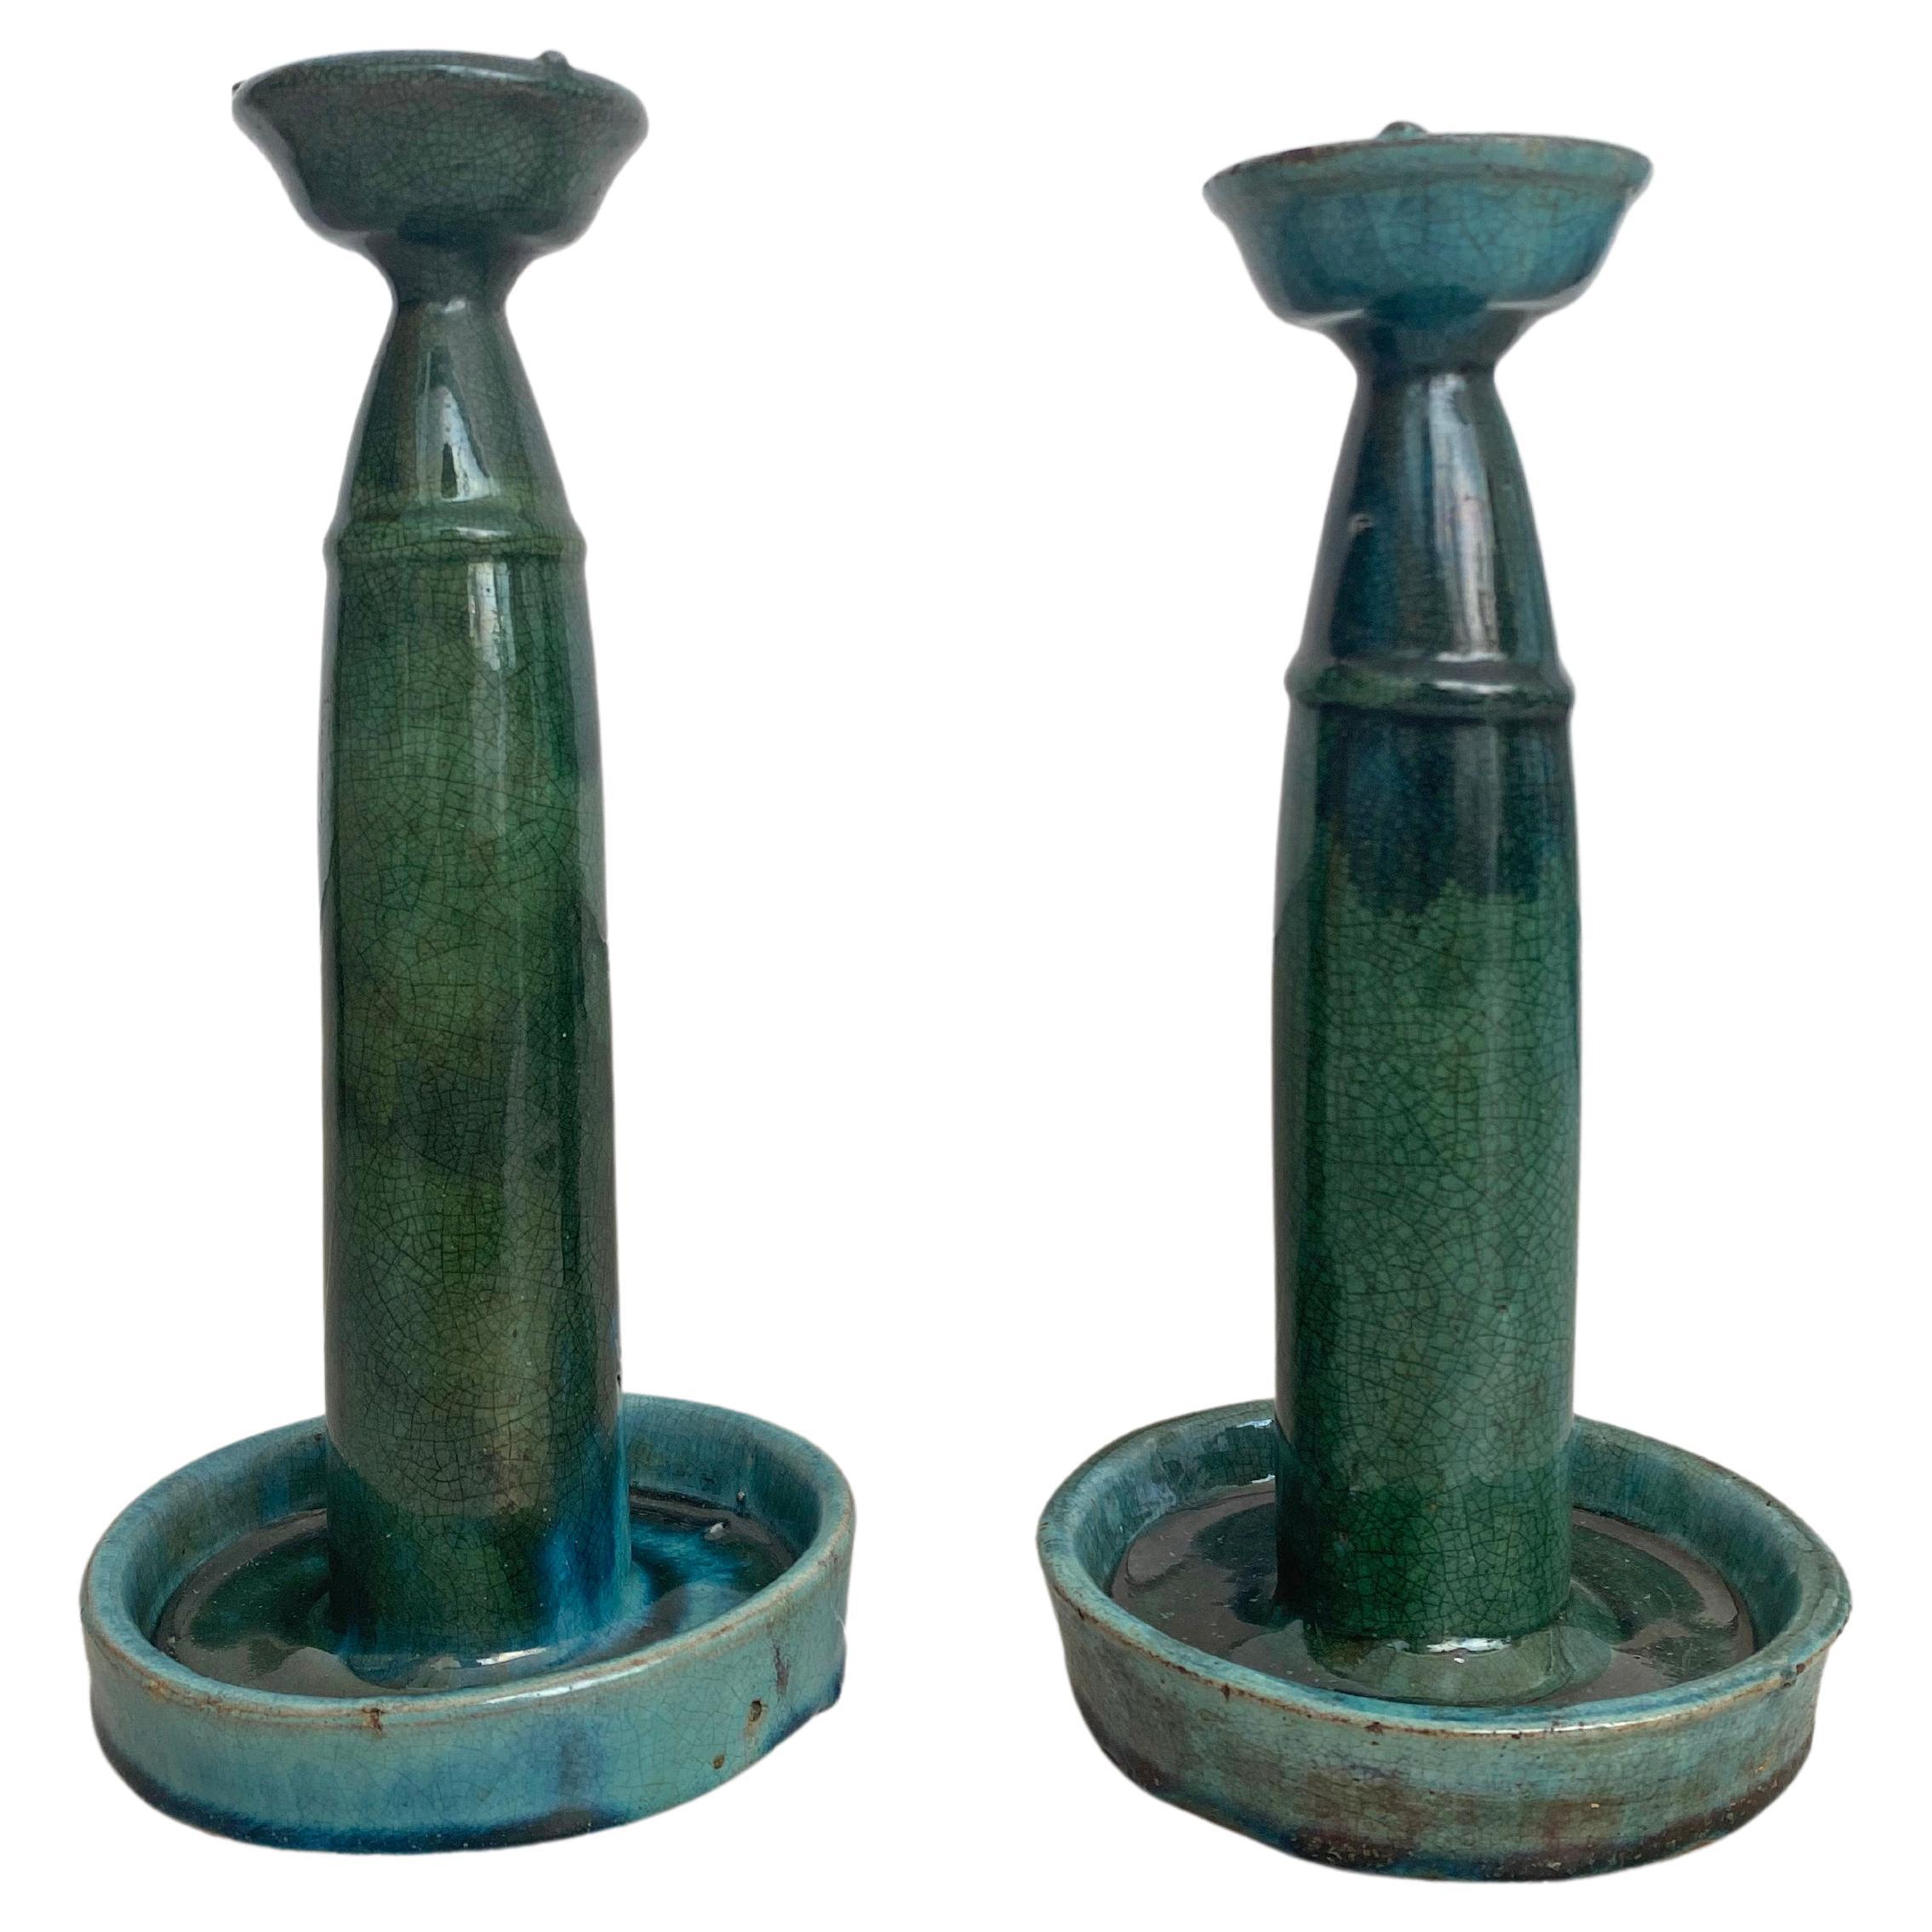 Chinese Ceramic 'Shiwan' Oil Lamp / Candleholder Set, Green Glaze, c. 1900